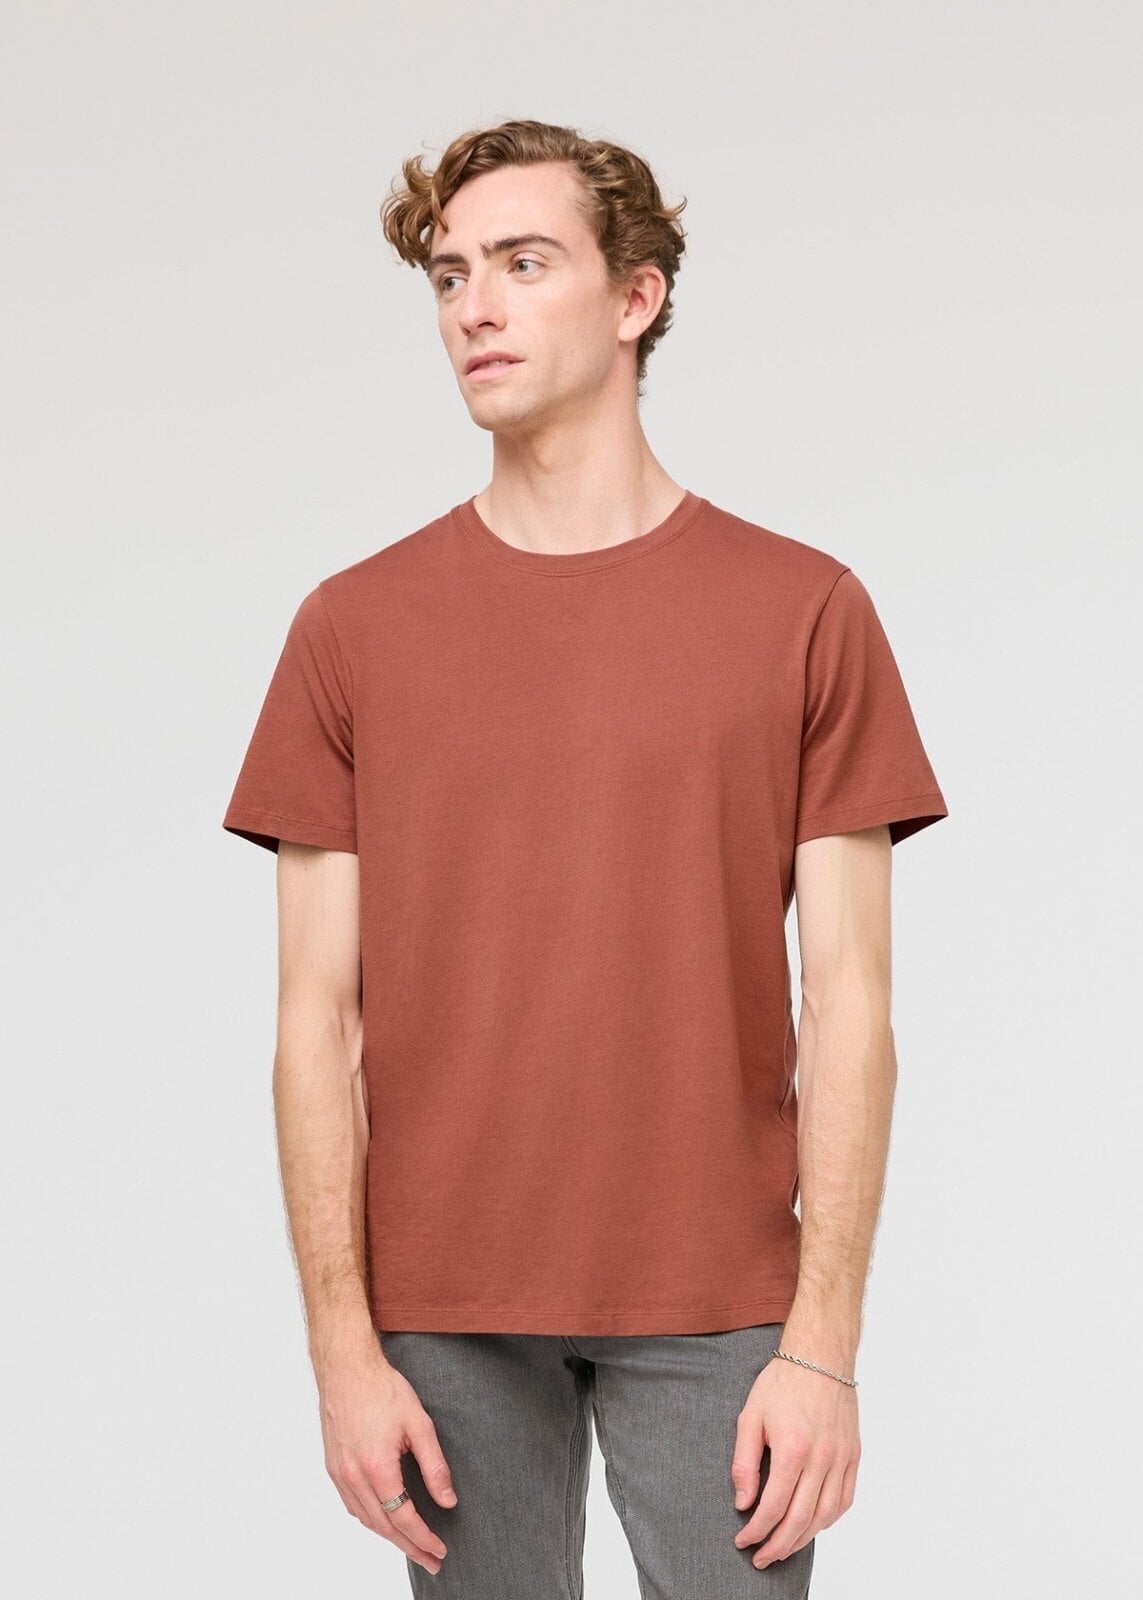 mens 100% Pima cotton rust t-shirt front